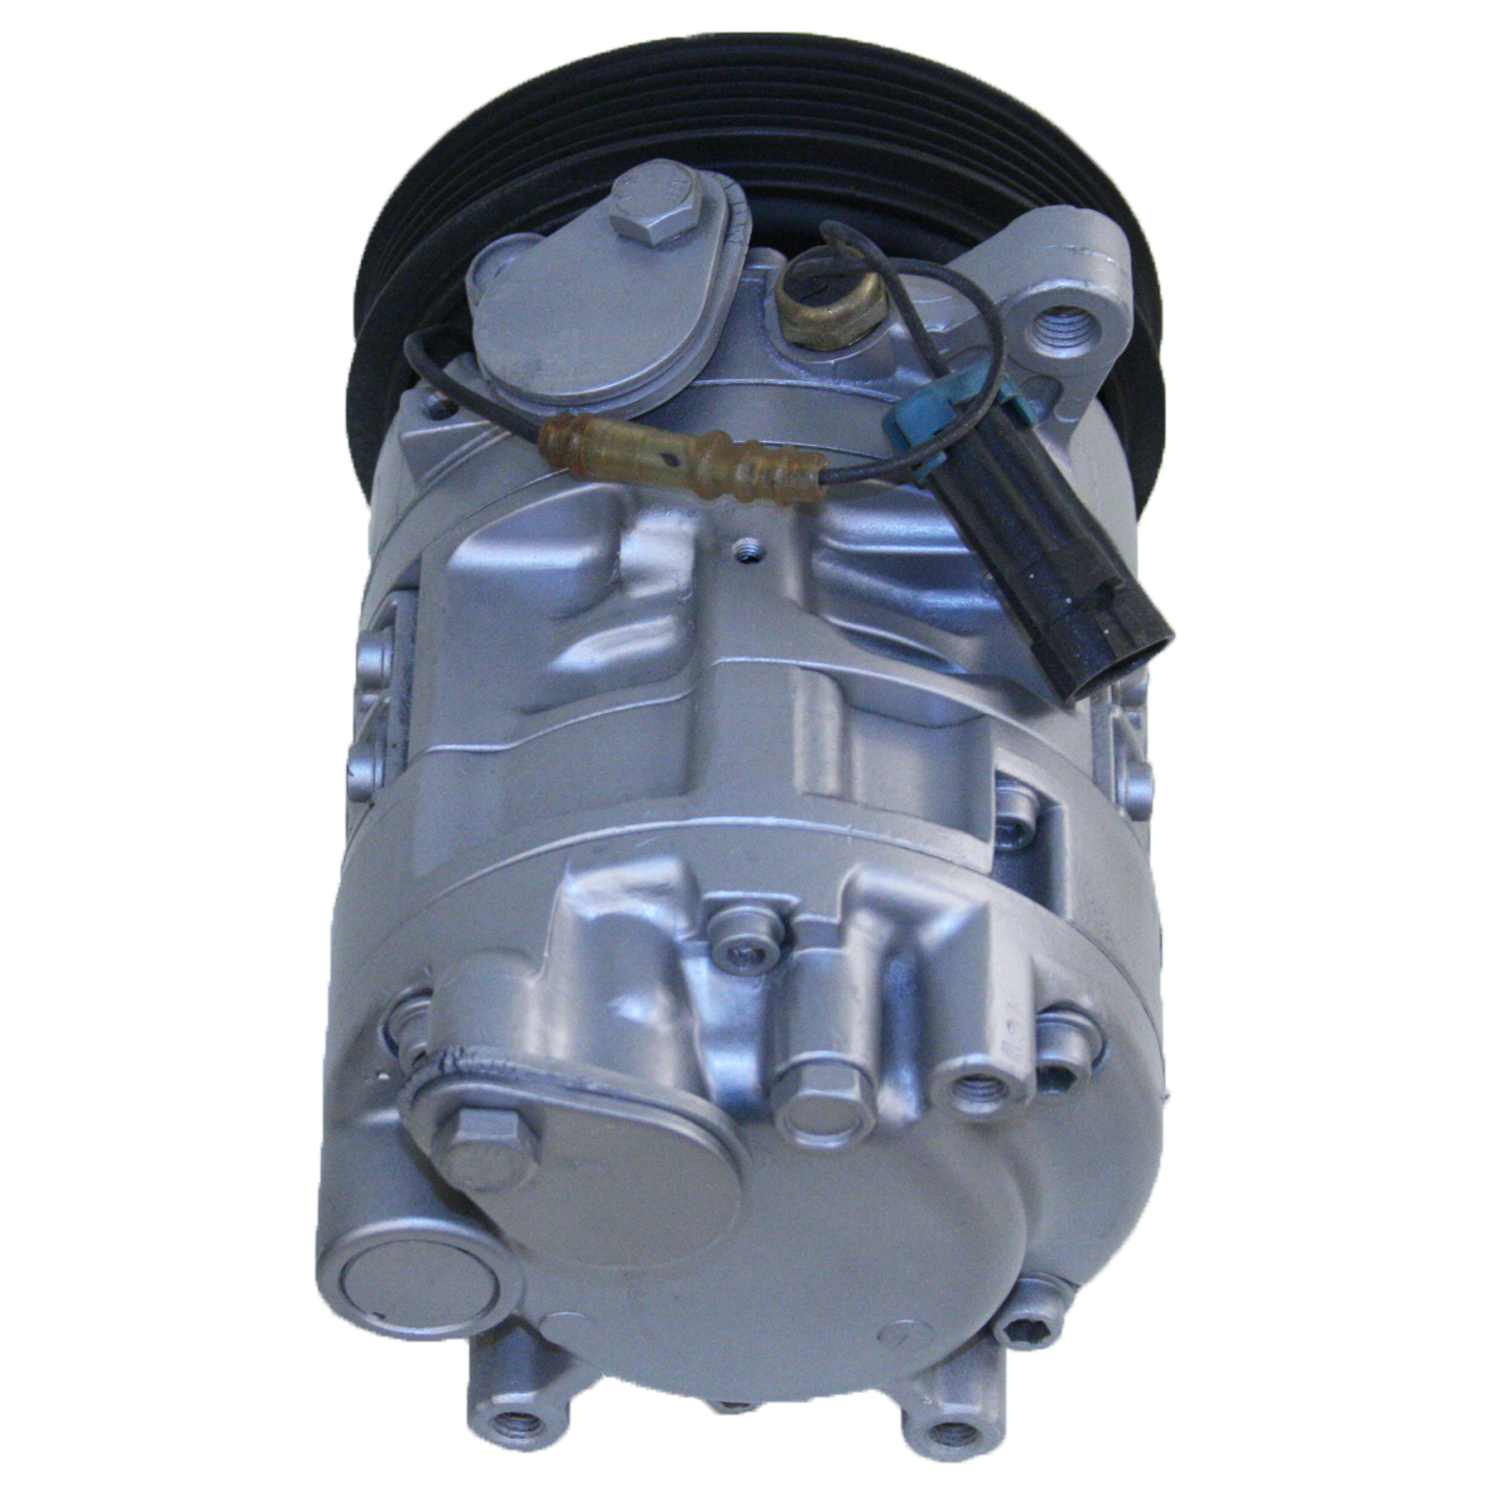 TCW Compressor 12620.501 Remanufactured Product Image field_60b6a13a6e67c